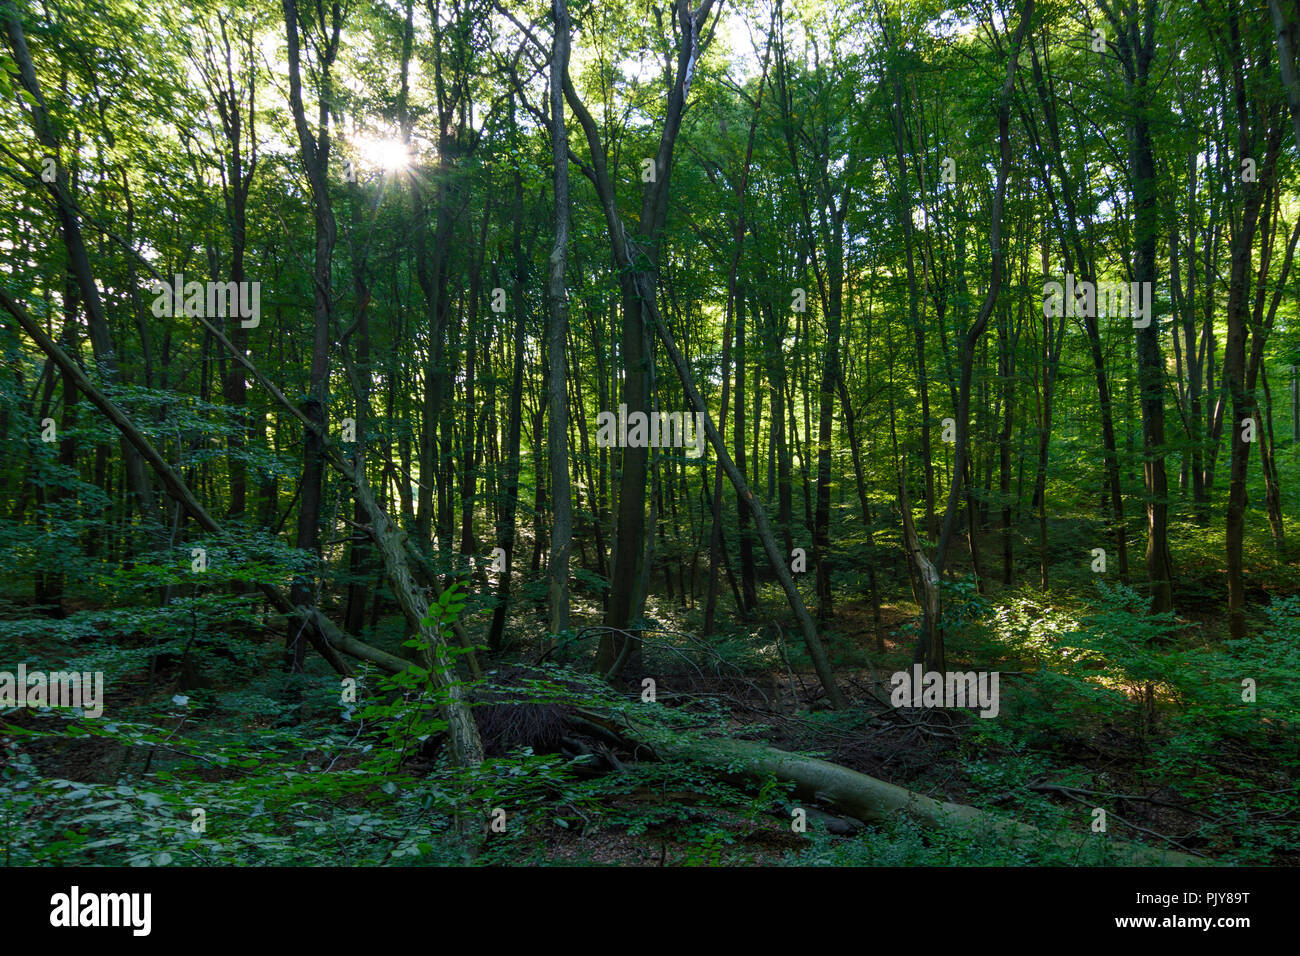 Wien, Vienna: natural forest, beech trees, fallen trees, wilderness area, 16. Ottakring, Wien, Austria Stock Photo